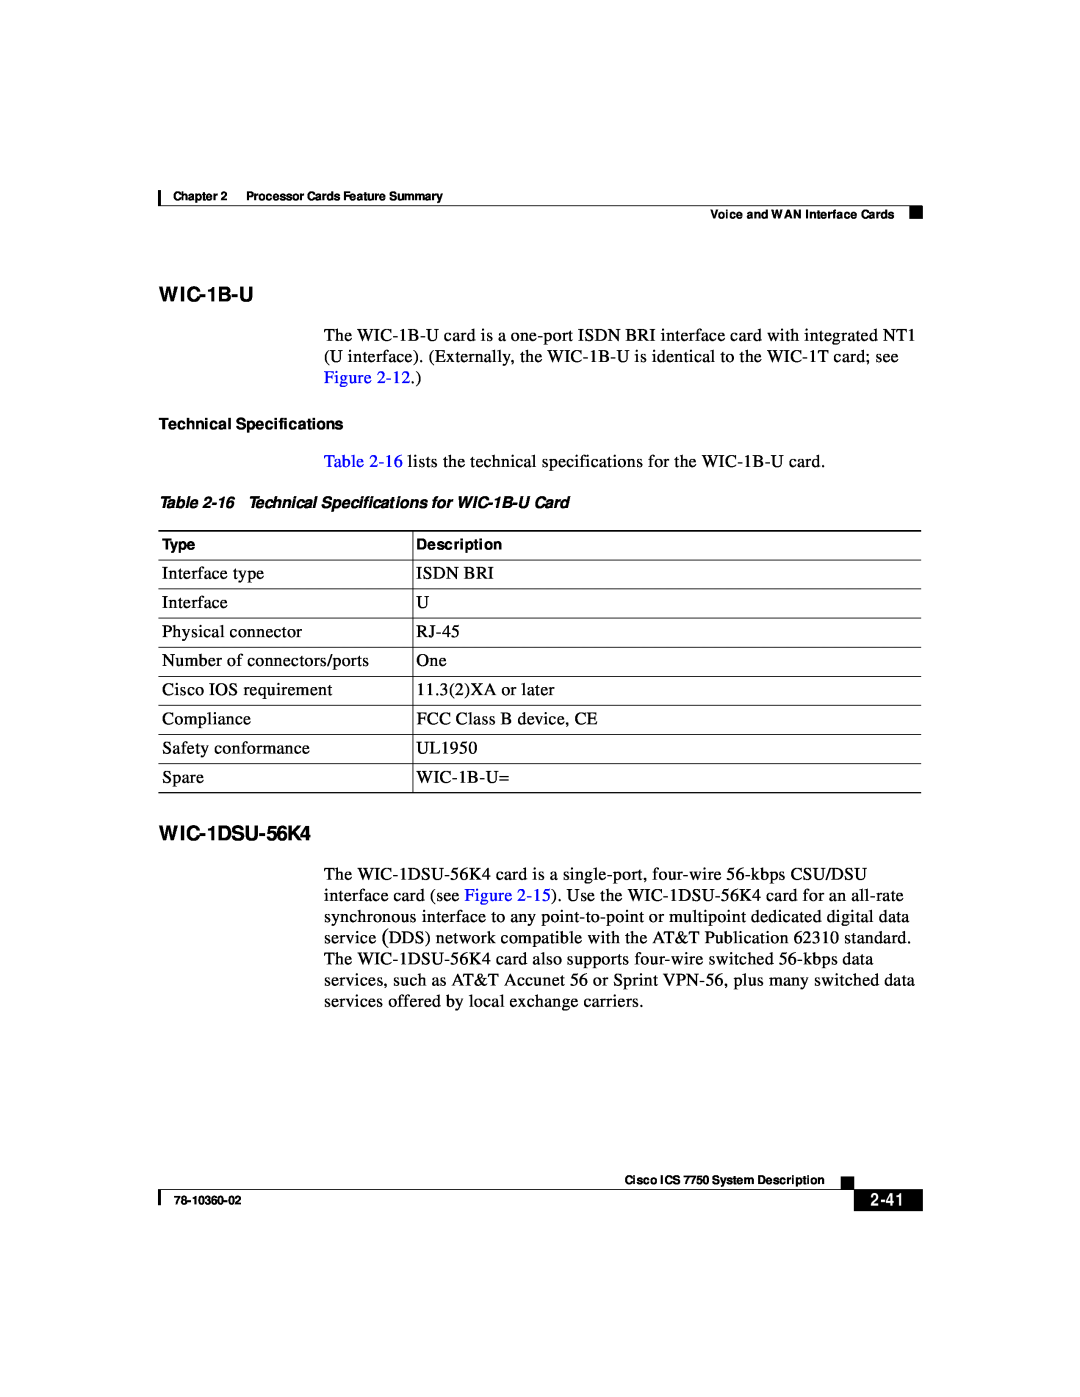 Cisco Systems ICS-7750 manual WIC-1B-U, WIC-1DSU-56K4, Technical Specifications, 2-41 